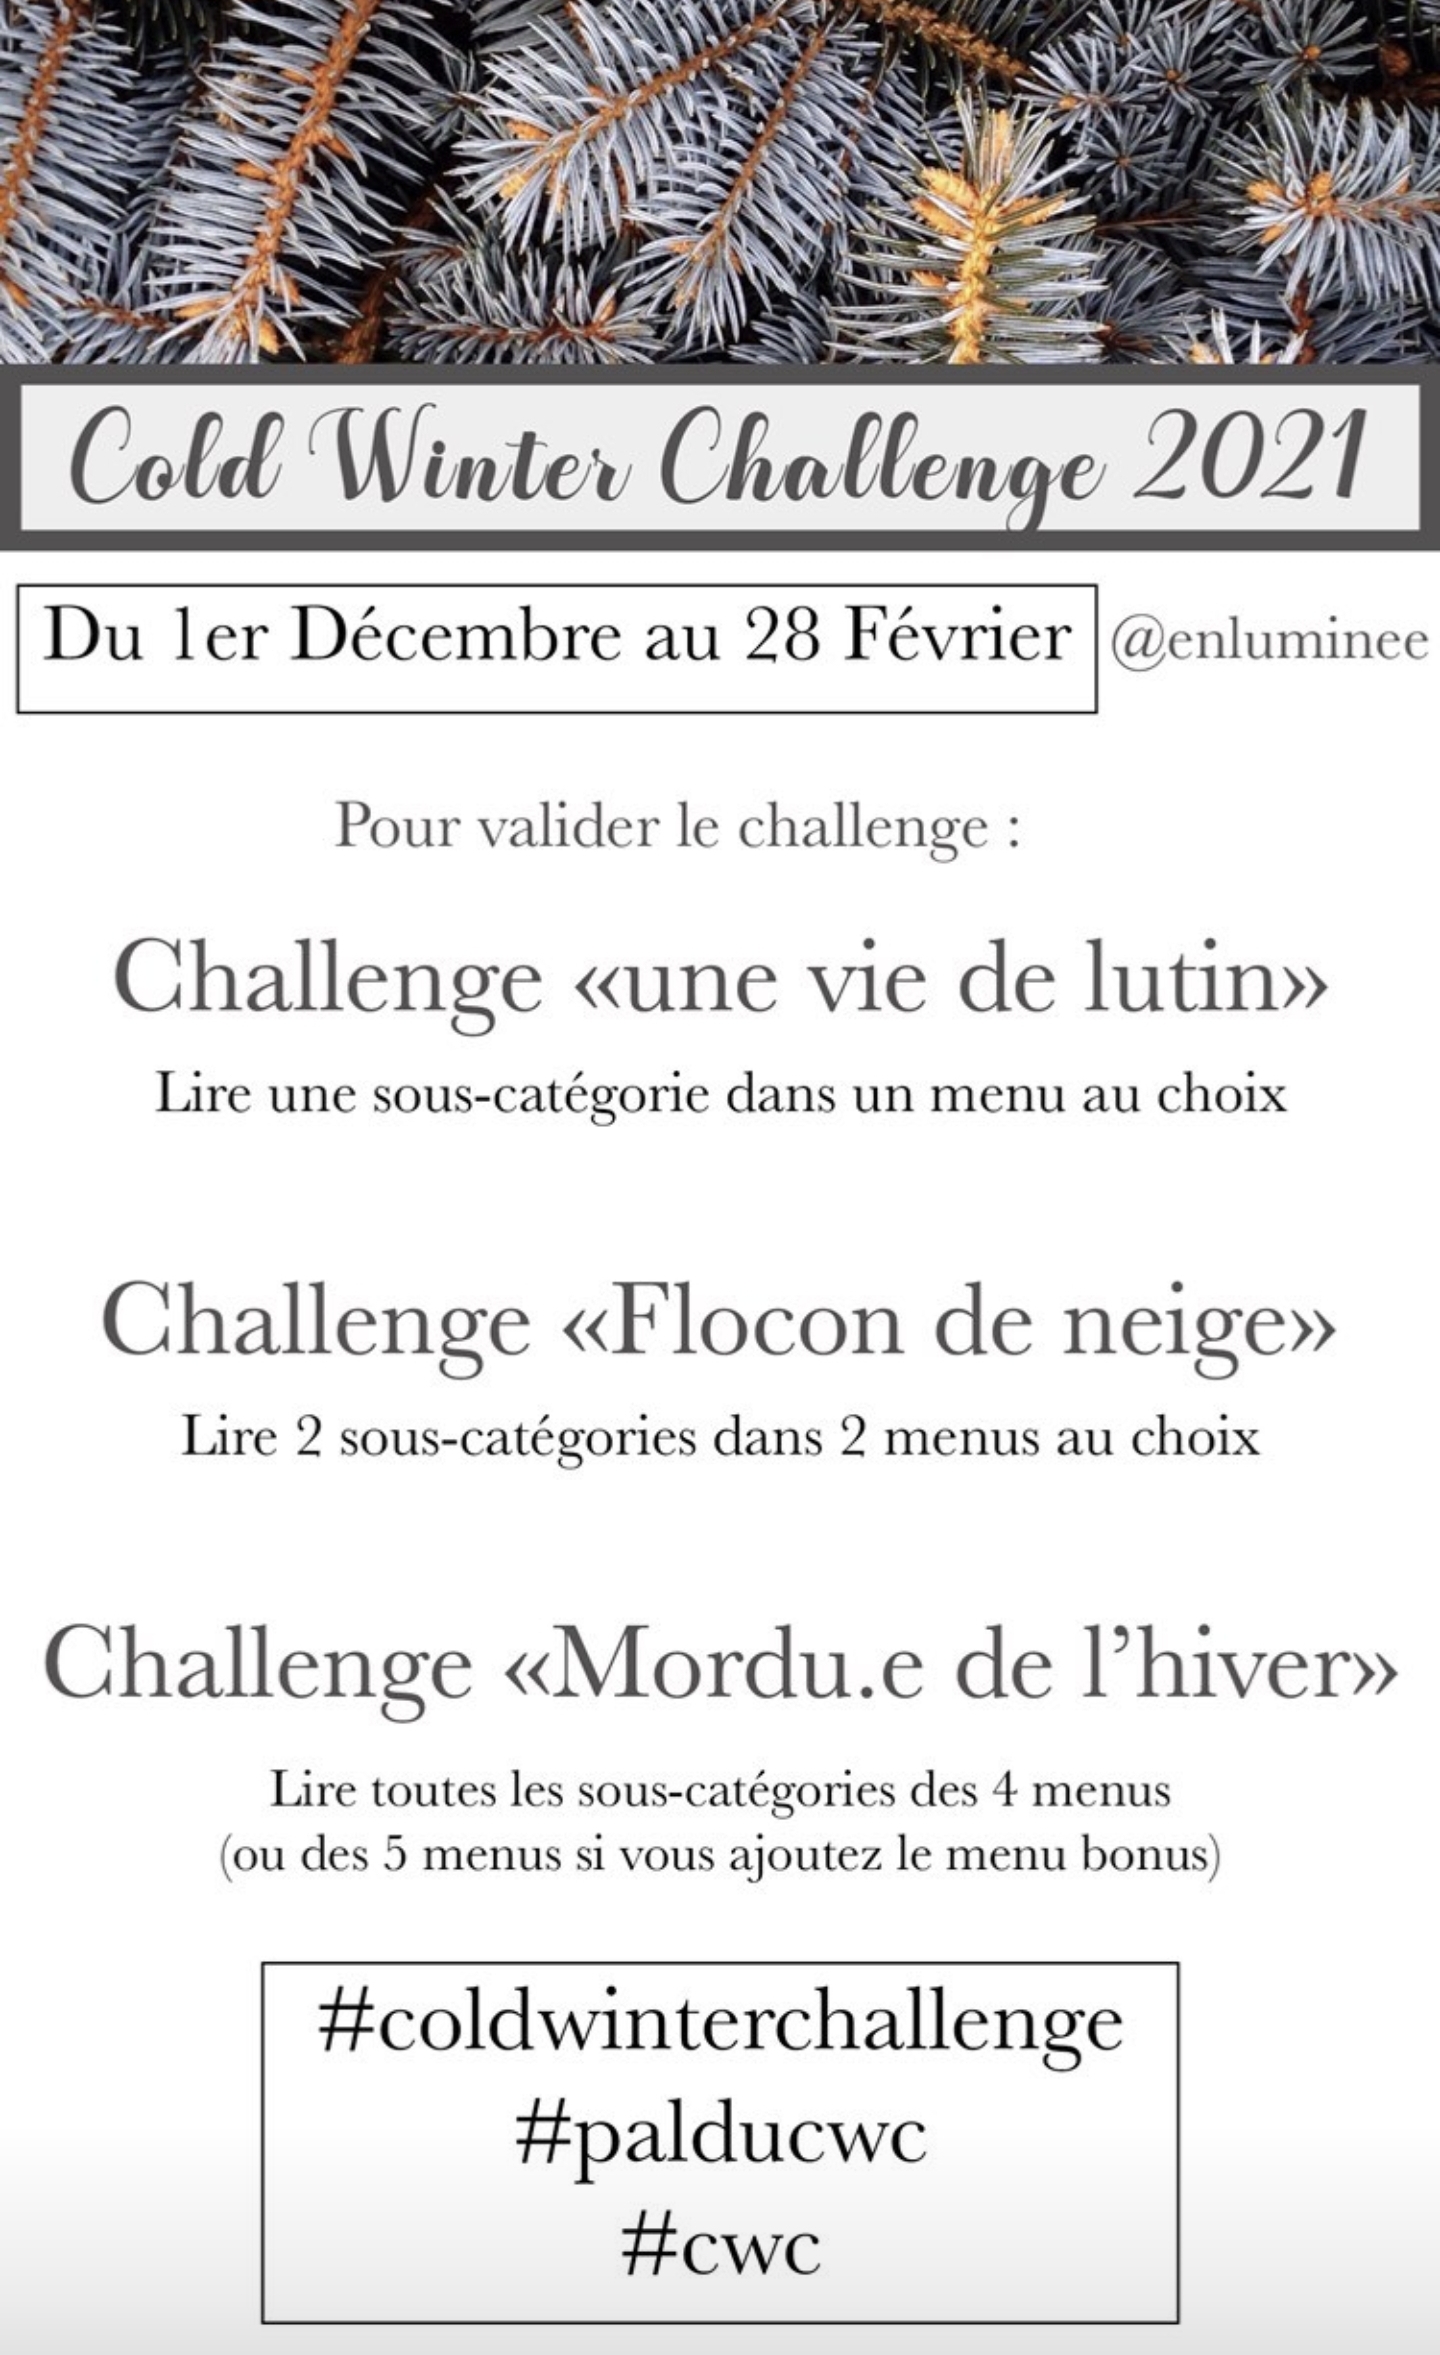 Cold Winter Challenge 2021 - Pour valider le challenge